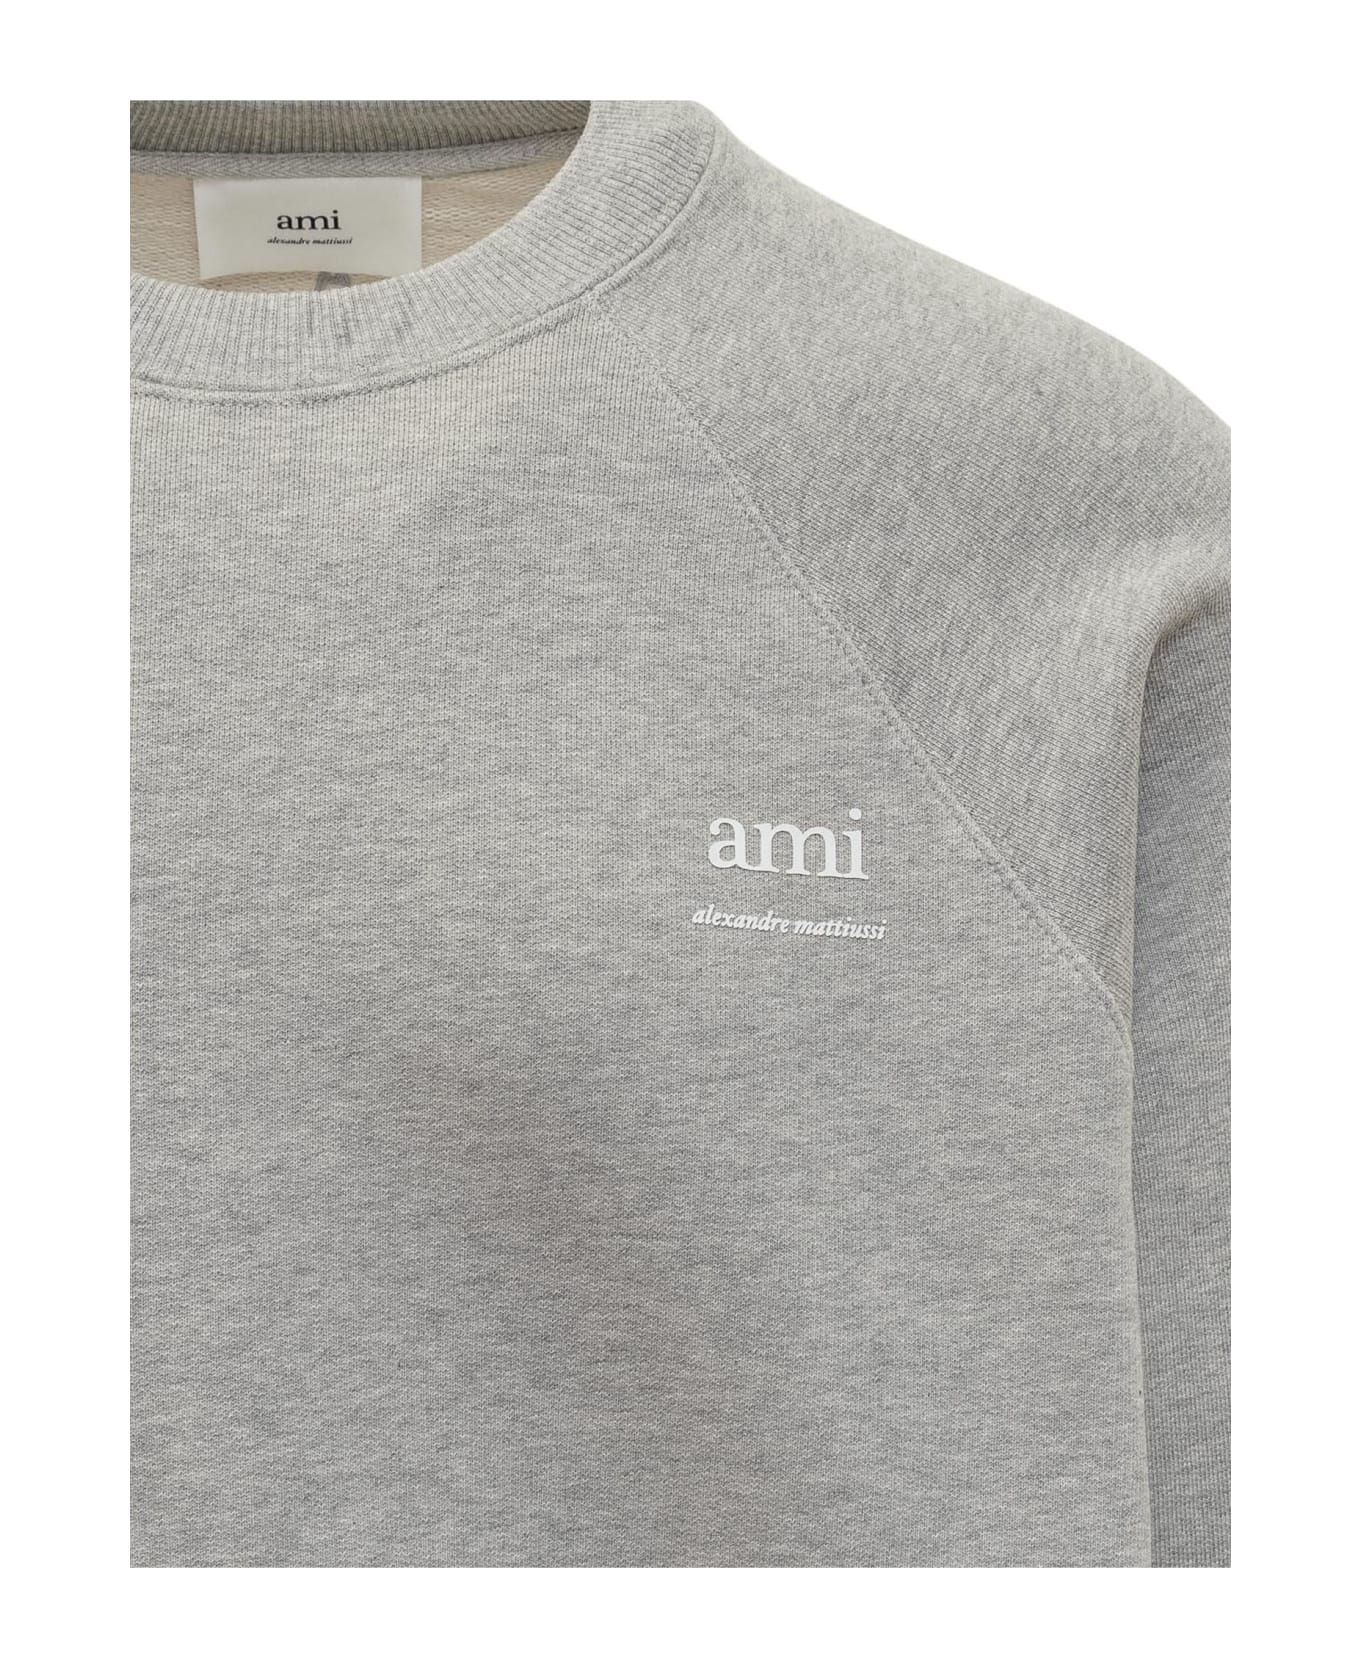 Ami Alexandre Mattiussi Sweatshirt With Logo - HEATHER ASH GREY フリース